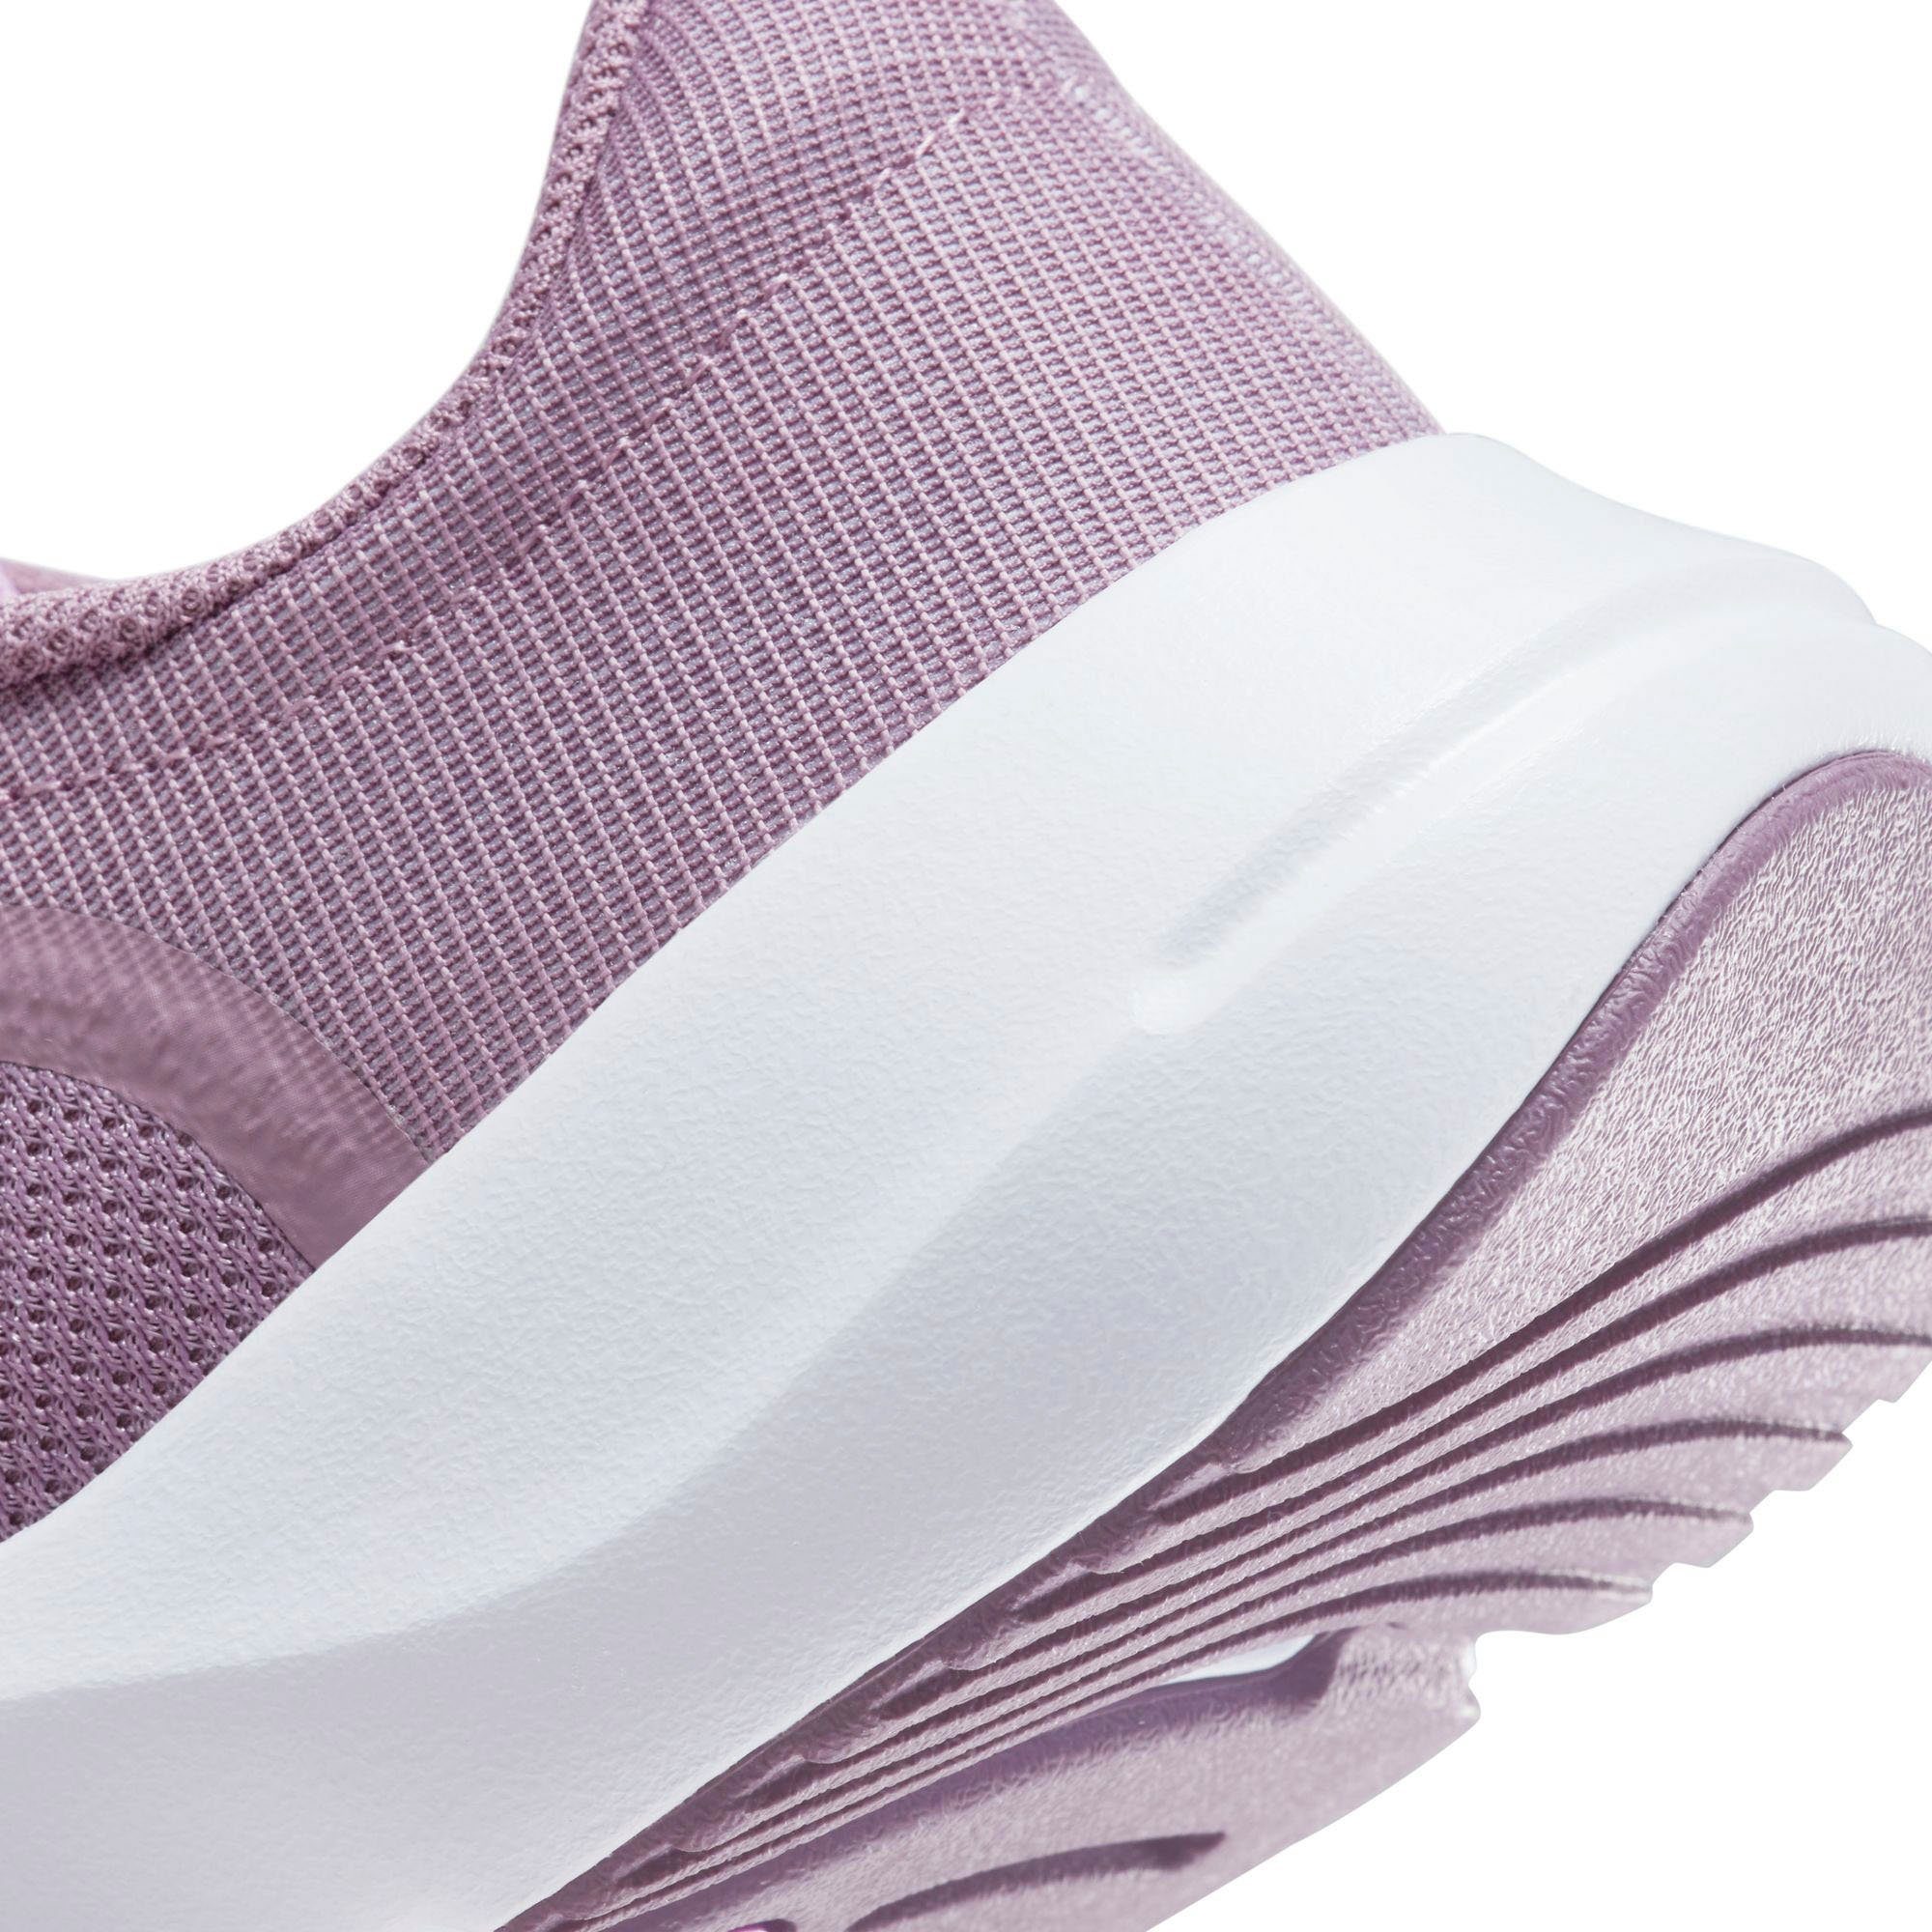 In-Season 13 TR Fitnessschuh violet dust Nike